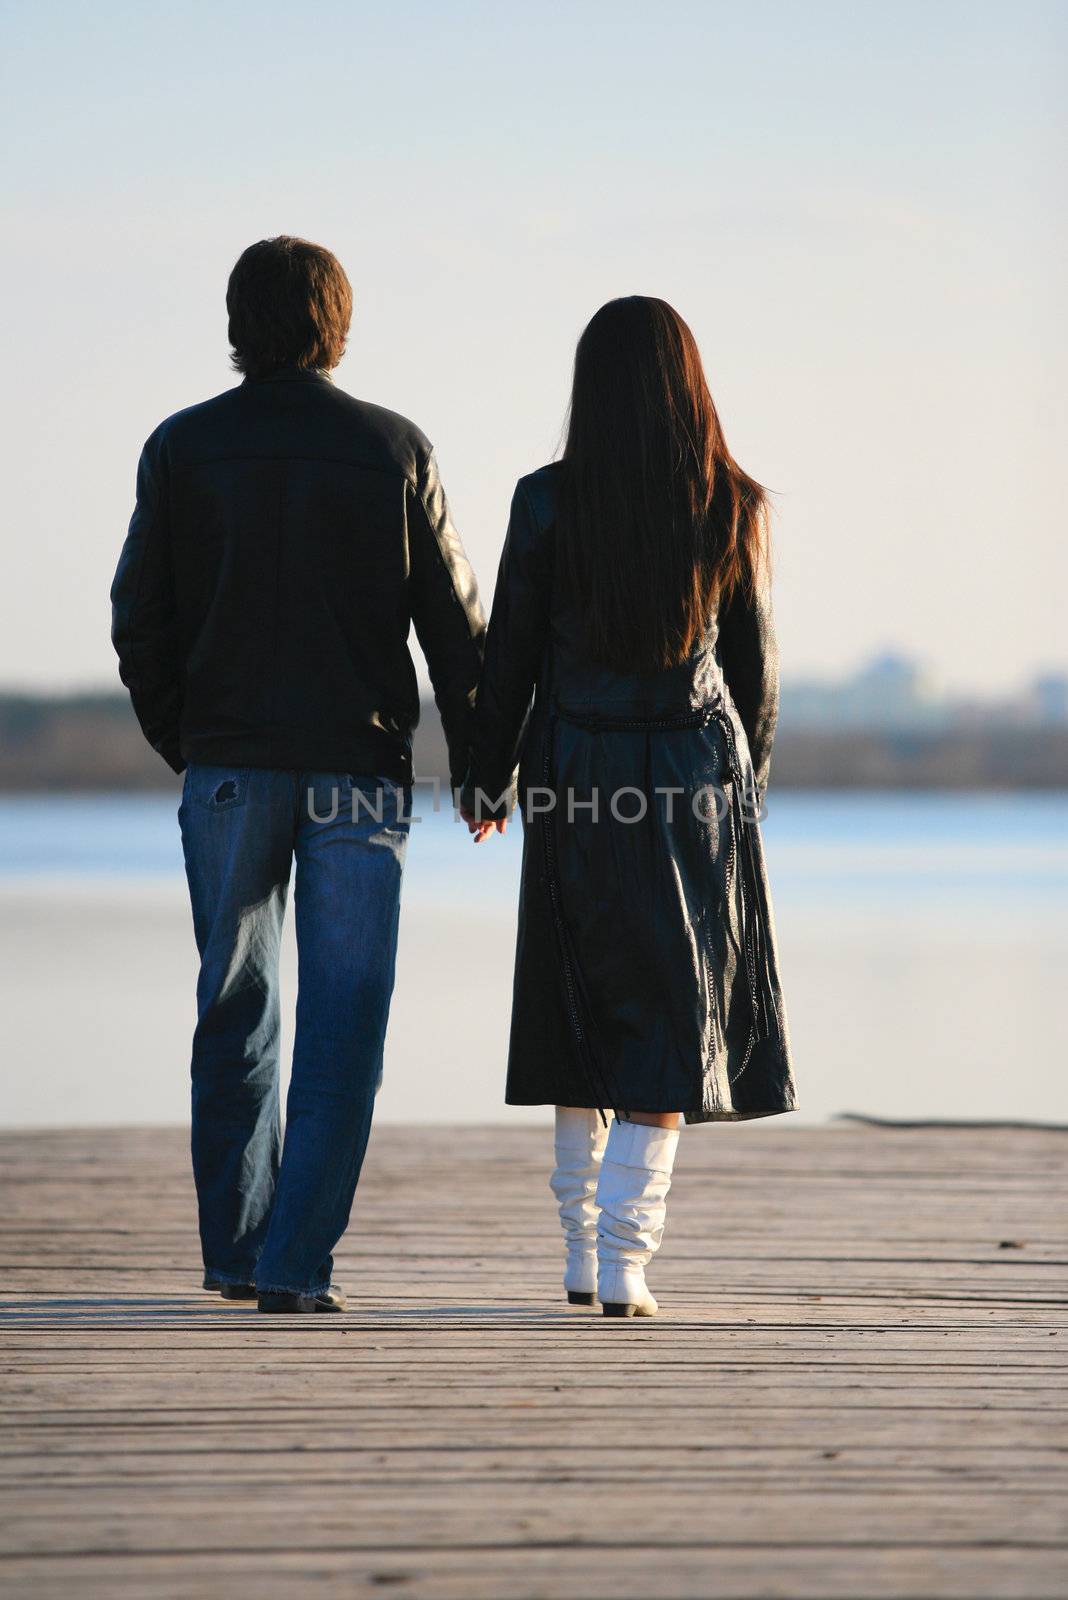 The in love pair walks on the bridge